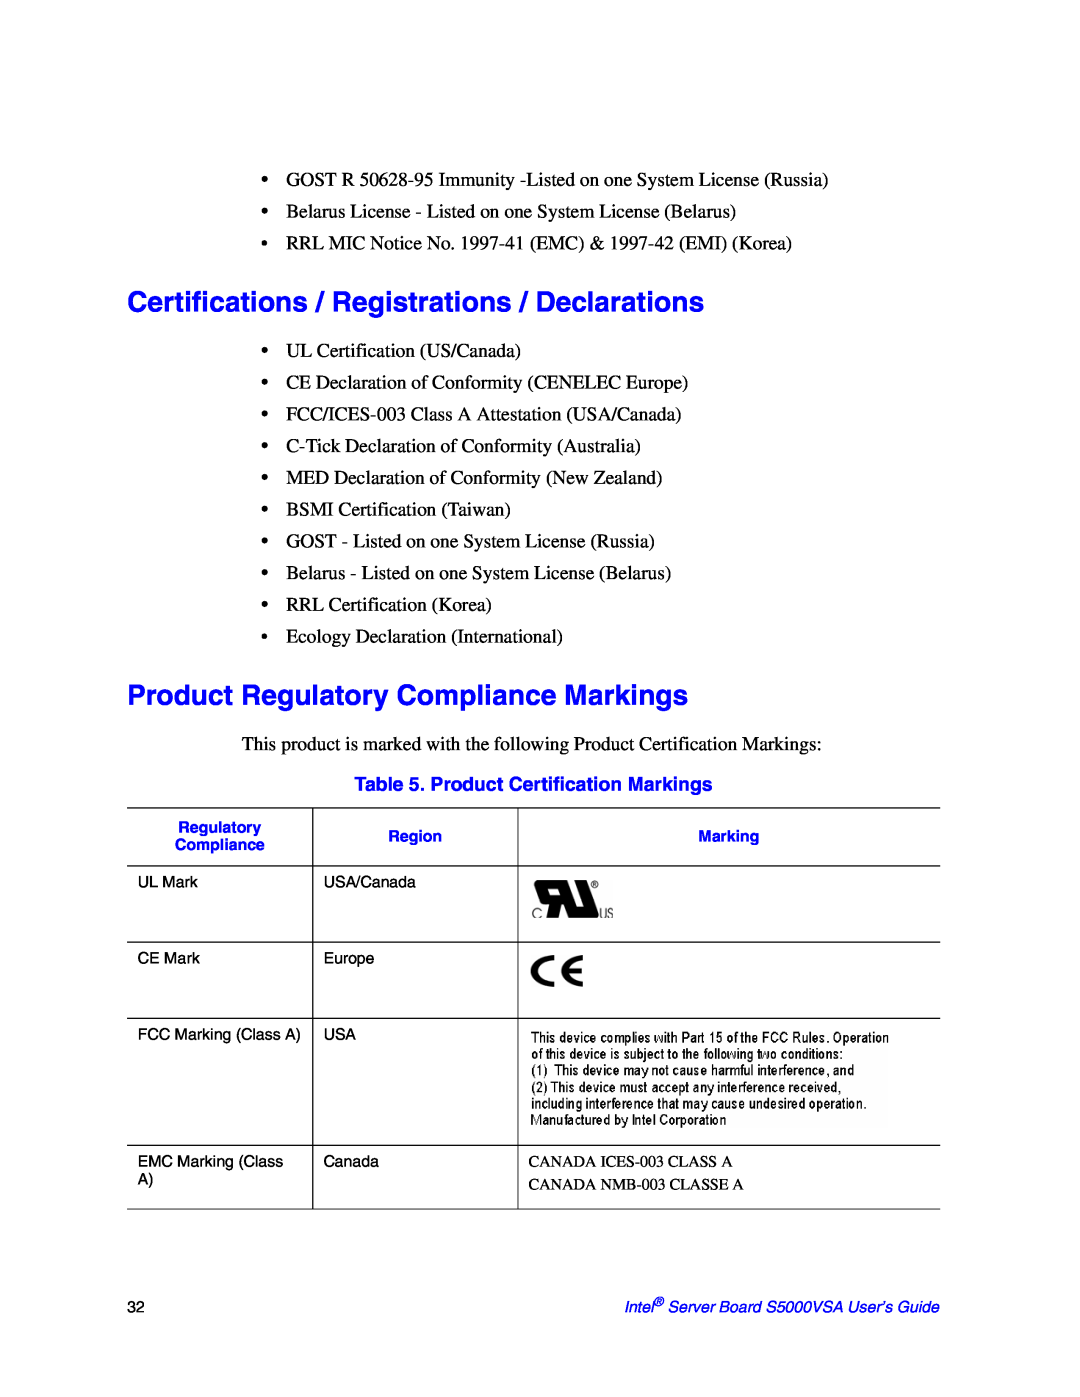 Intel S5000VSA manual Certifications / Registrations / Declarations, Product Regulatory Compliance Markings 